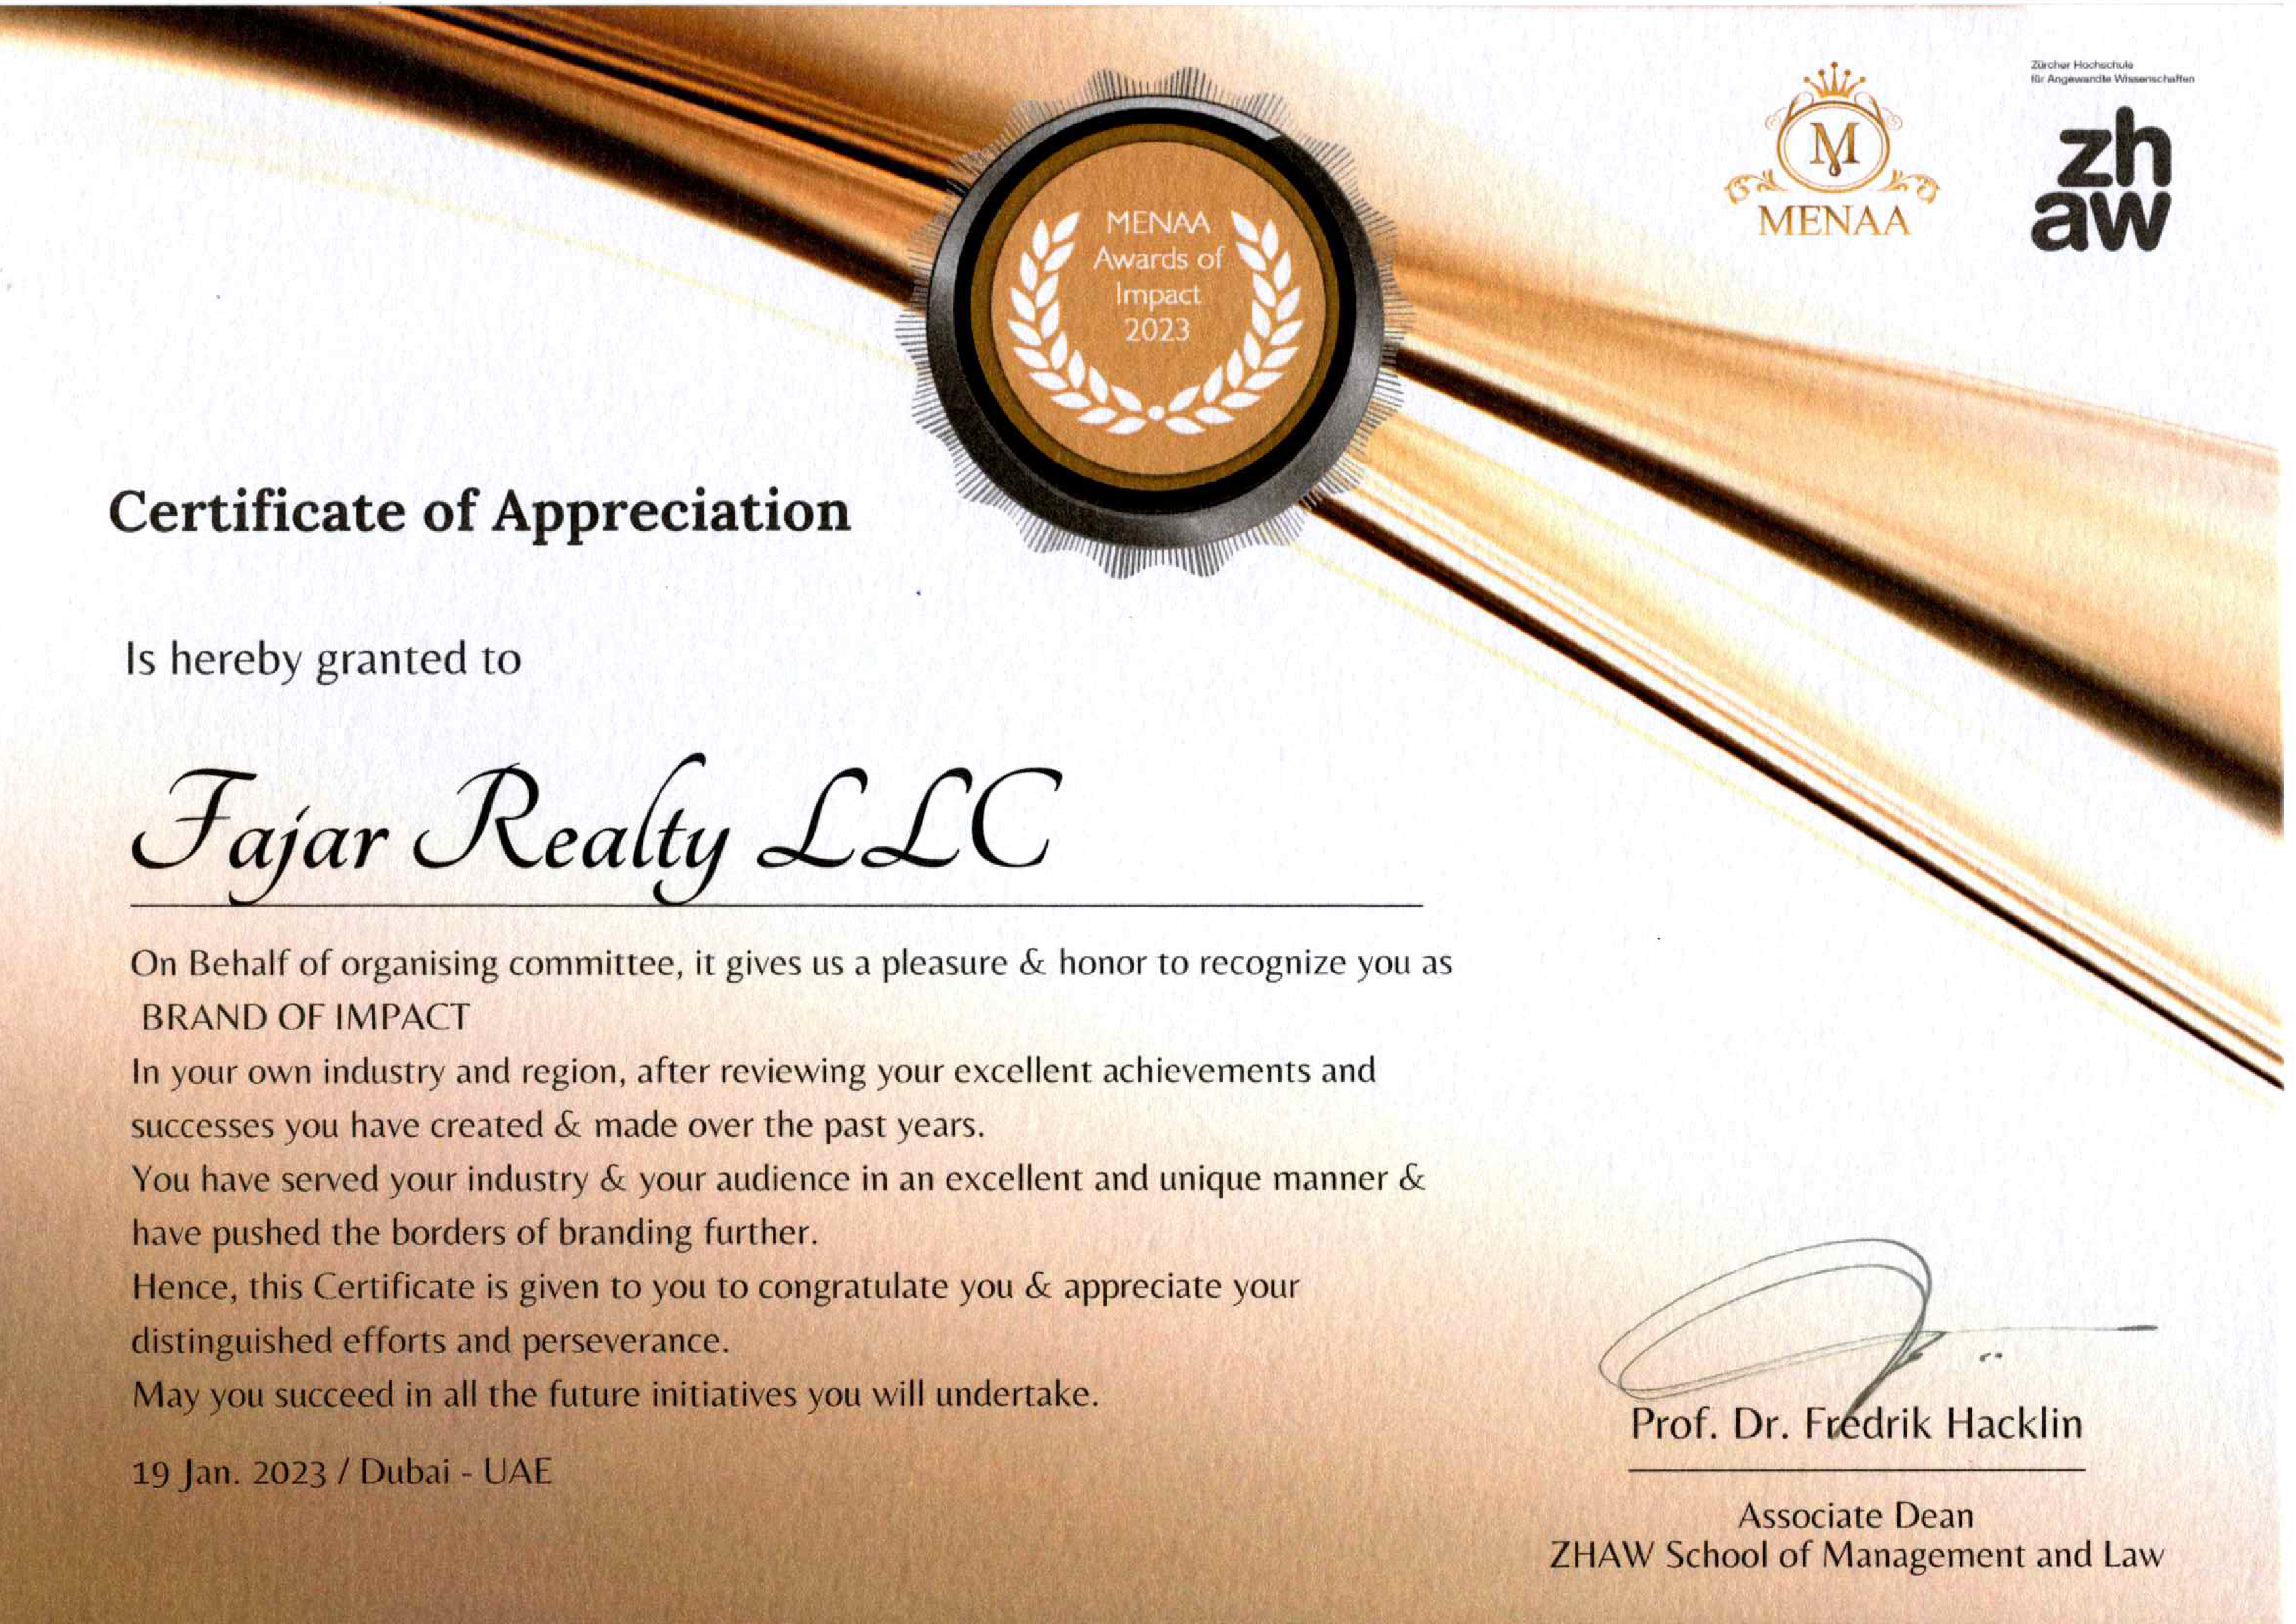 Certificate of Appreciation Menaa Awards of Impact 2023 Fajar Realty LLC